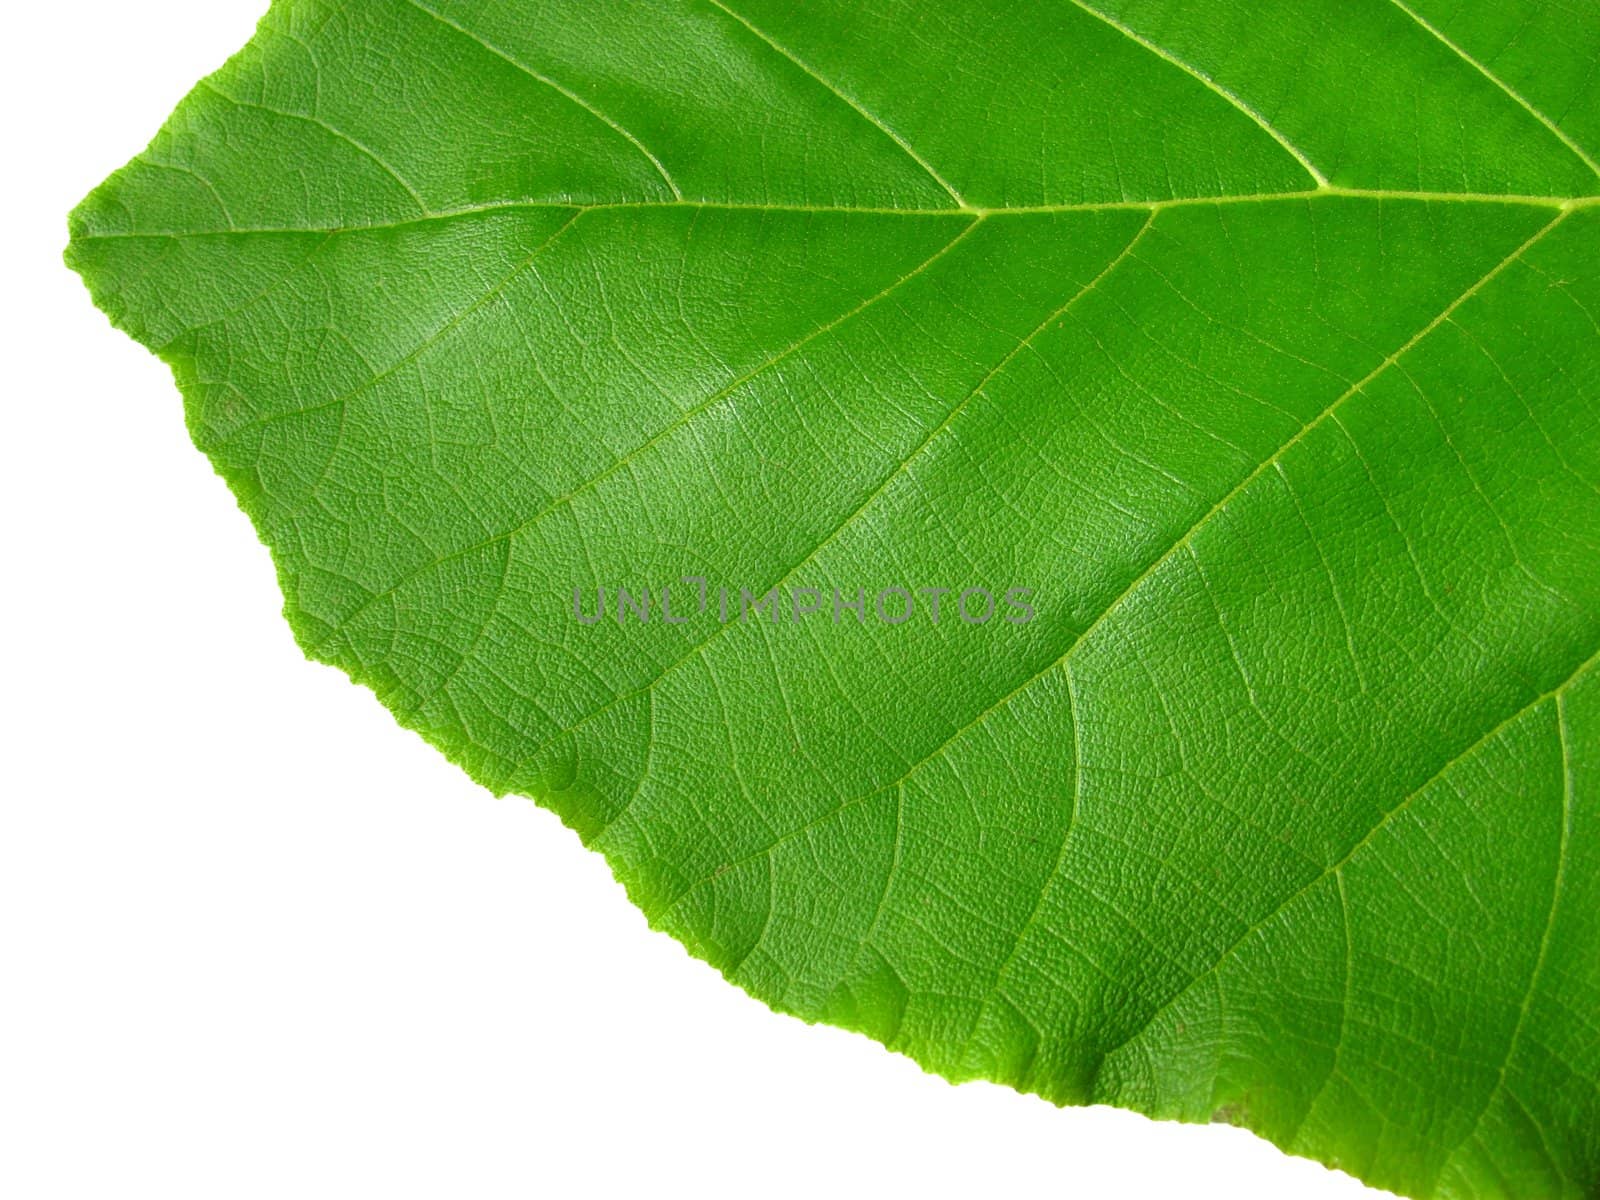 Vivid Green leaf texture by lkant